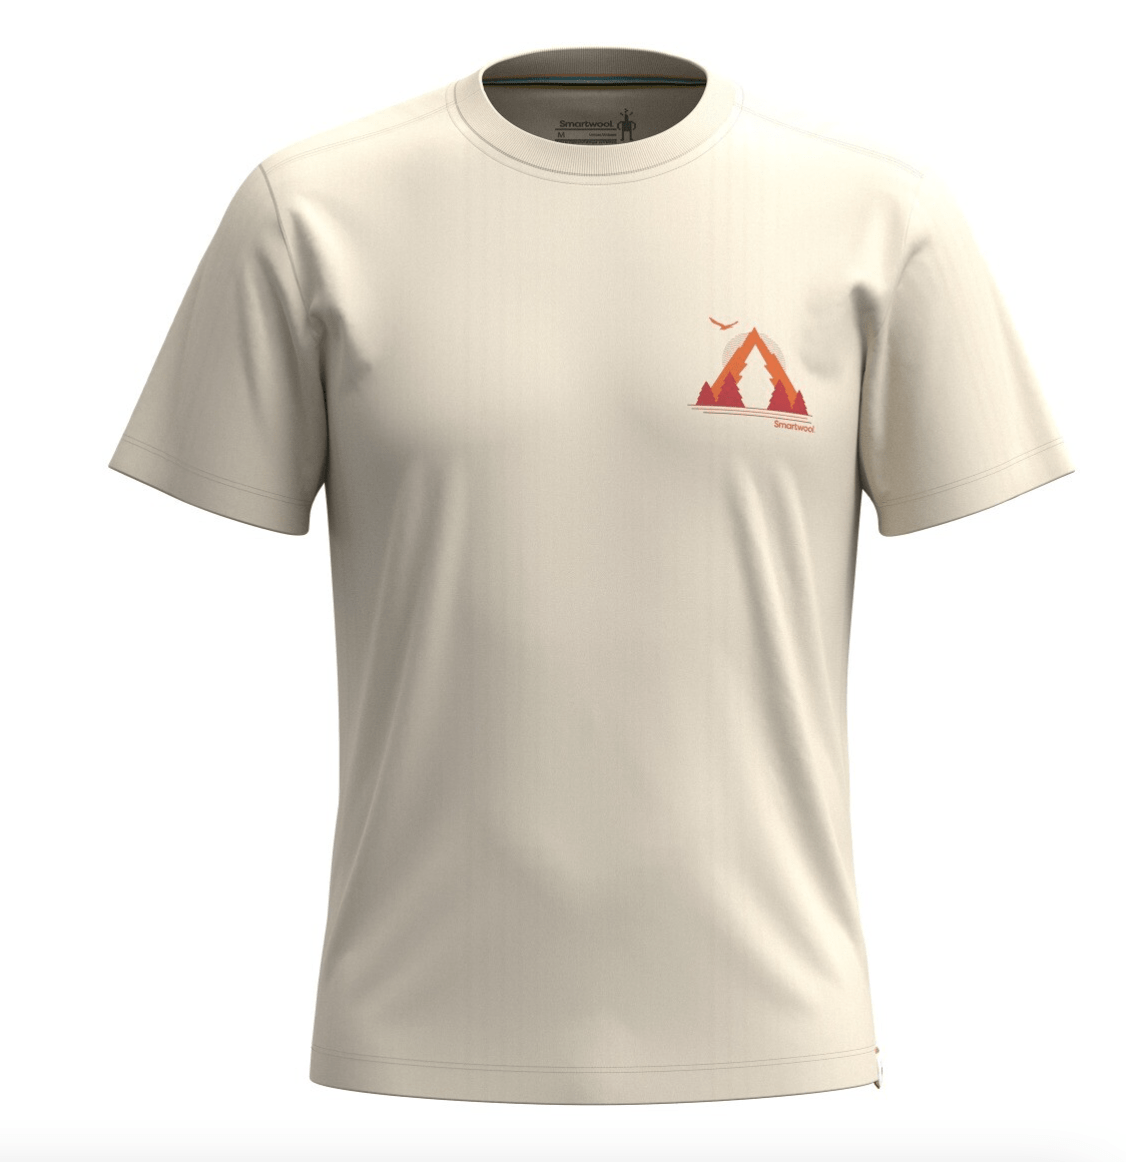 Smartwool T-Shirt M / Almond Smartwool T-shirt with Go Far print. Feel Good. Short Sleeve Slim Fit